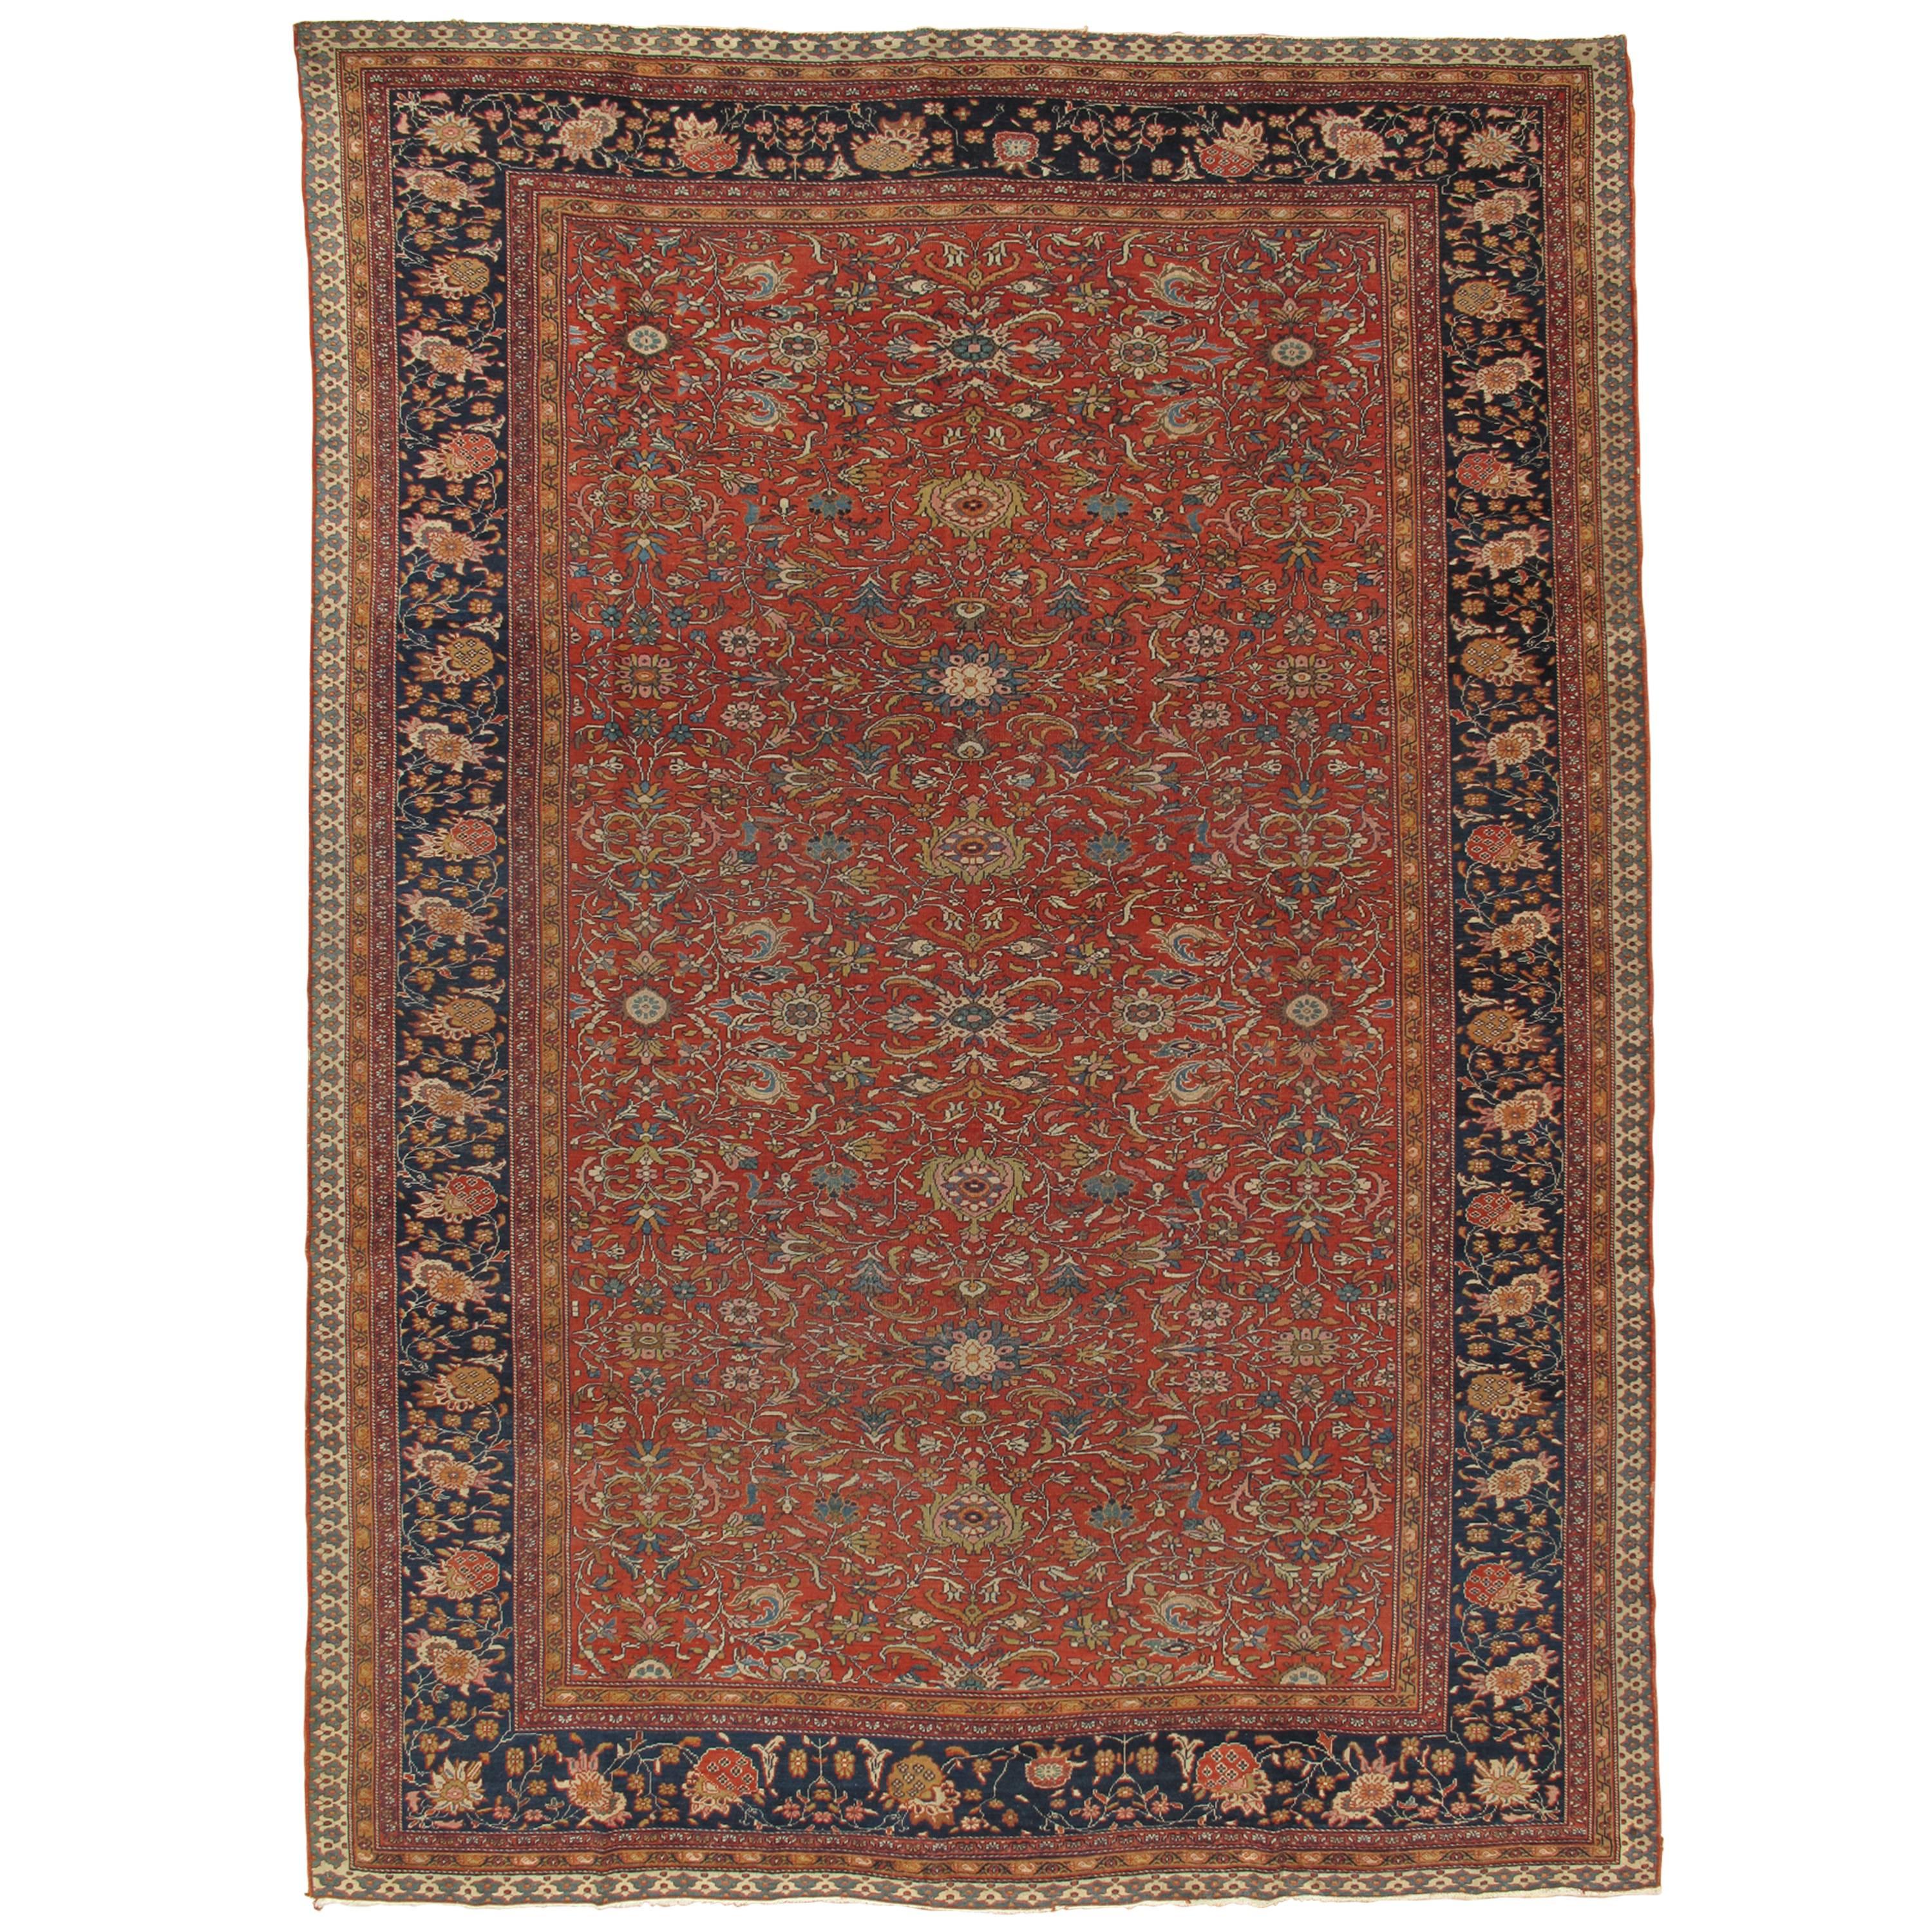 Antique Farahan Sarouk Carpet, Handmade Oriental Rug, Ivory, Red, Navy, Fine  For Sale